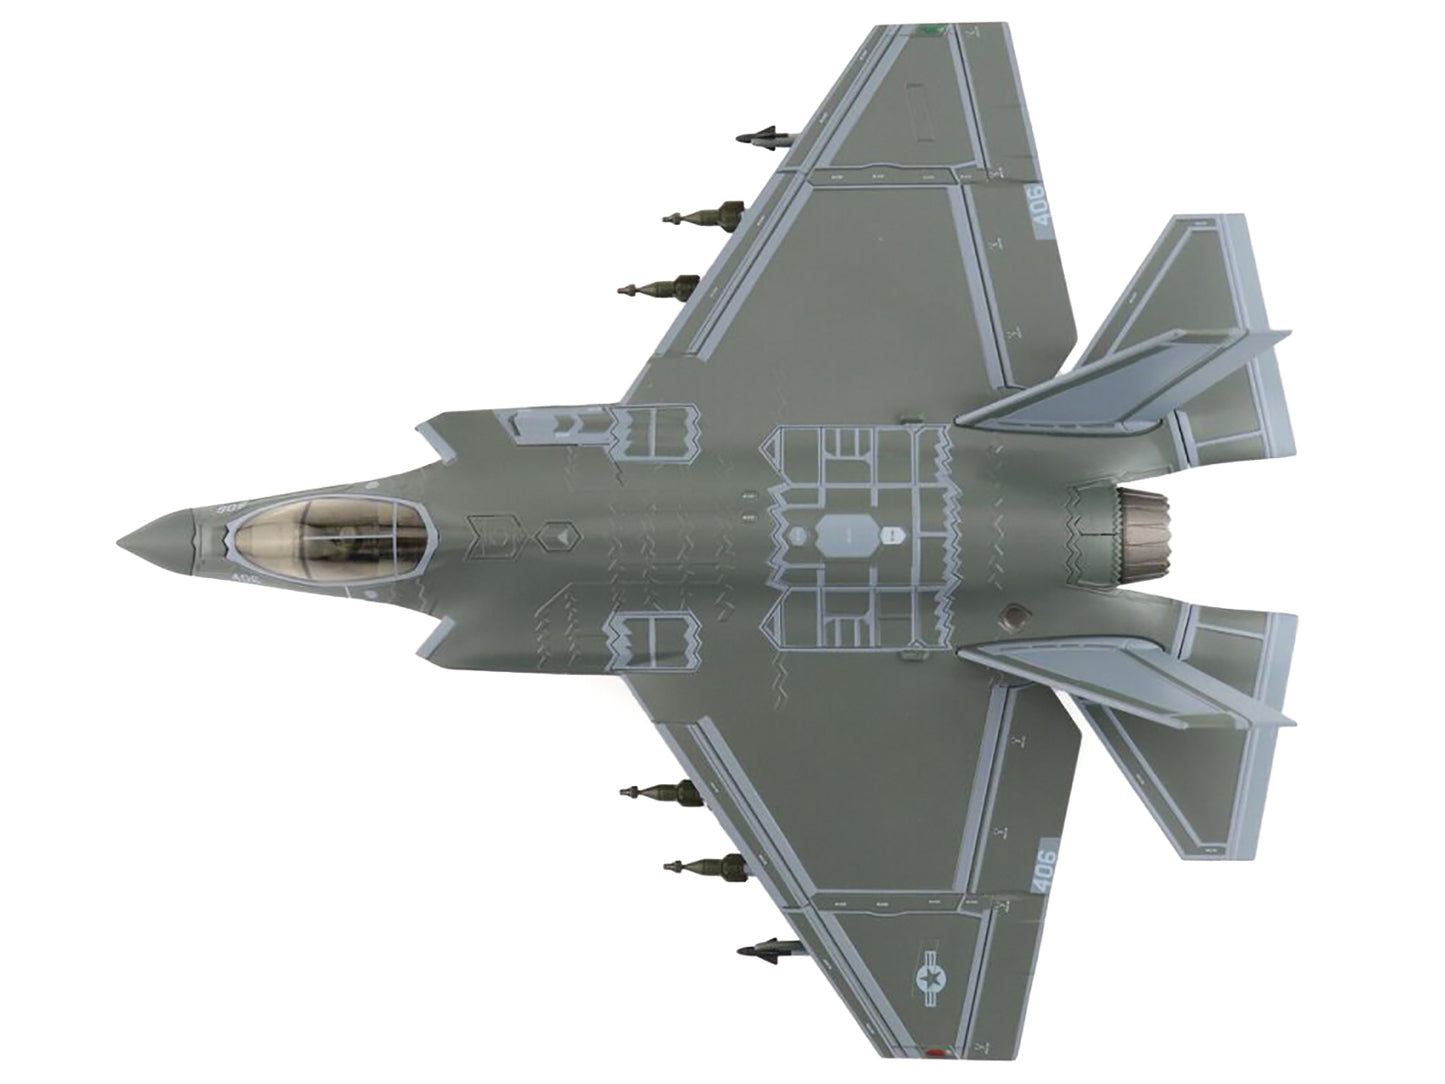 Lockheed Martin F-35C Lightning II Aircraft "VFA-147 'Argonauts' USS Carl Vinson" (2021) United States Navy "Air Power Series" 1/72 Diecast Model by Hobby Master